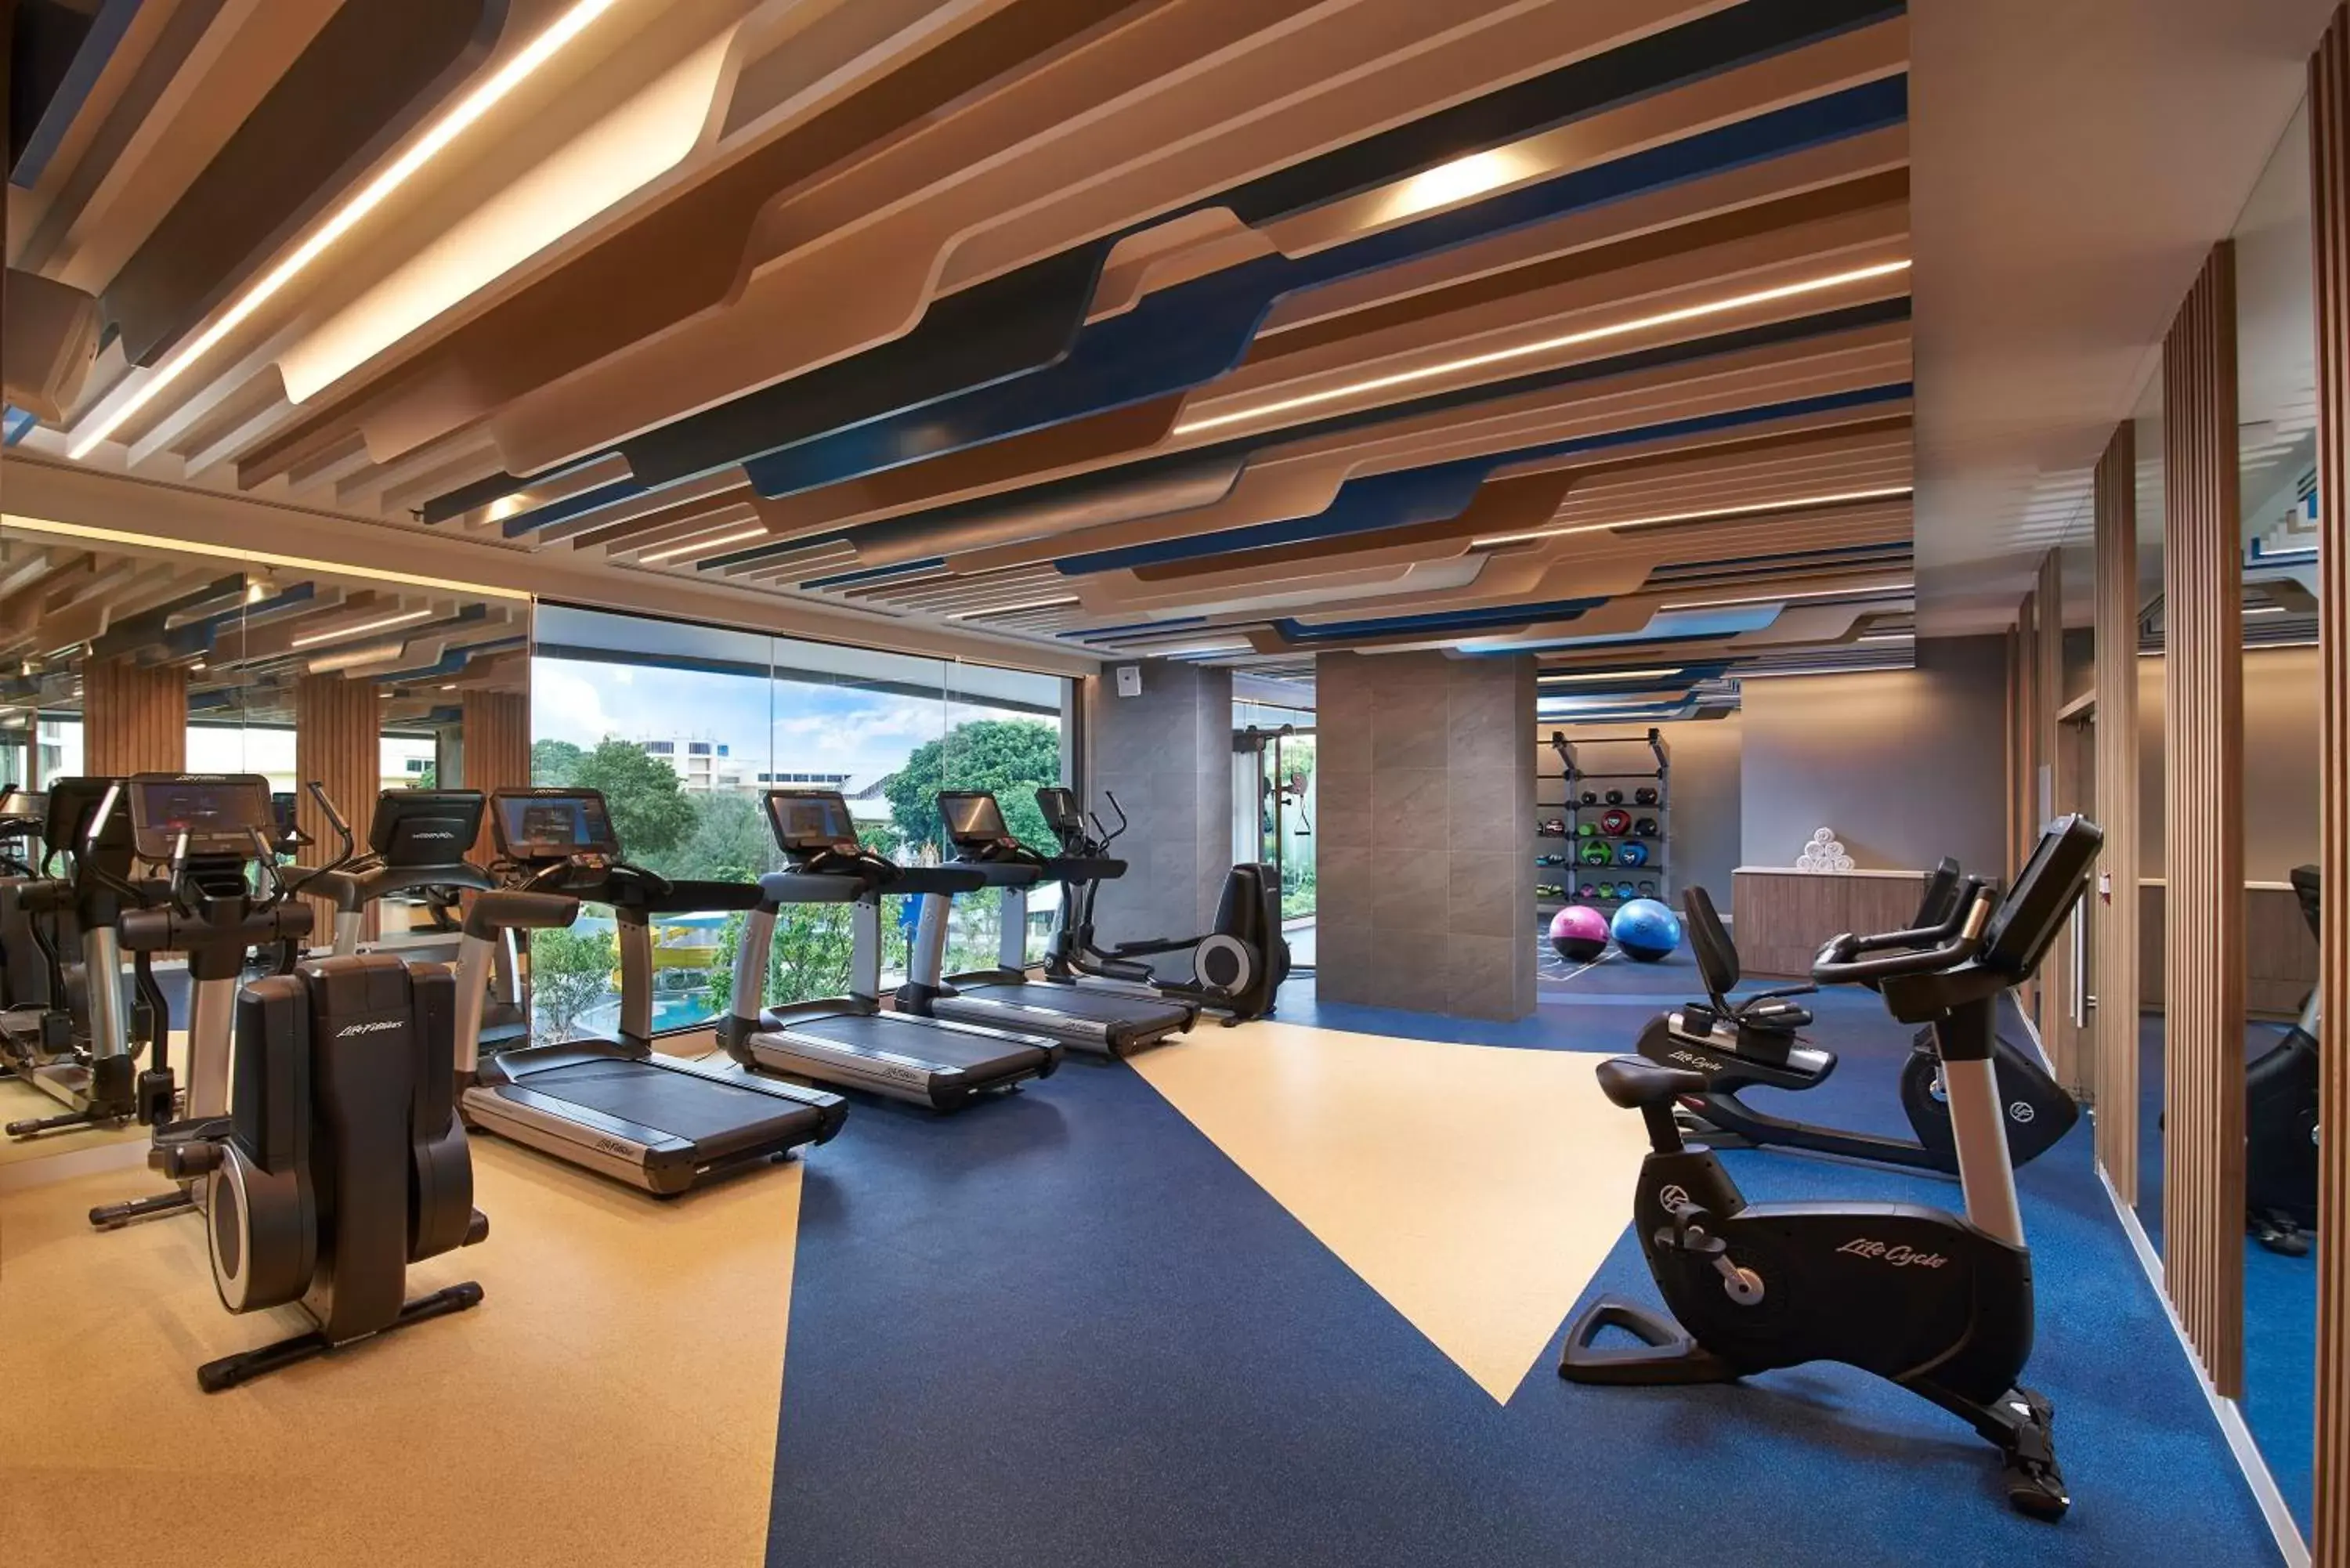 Fitness centre/facilities, Fitness Center/Facilities in OZO North Pattaya